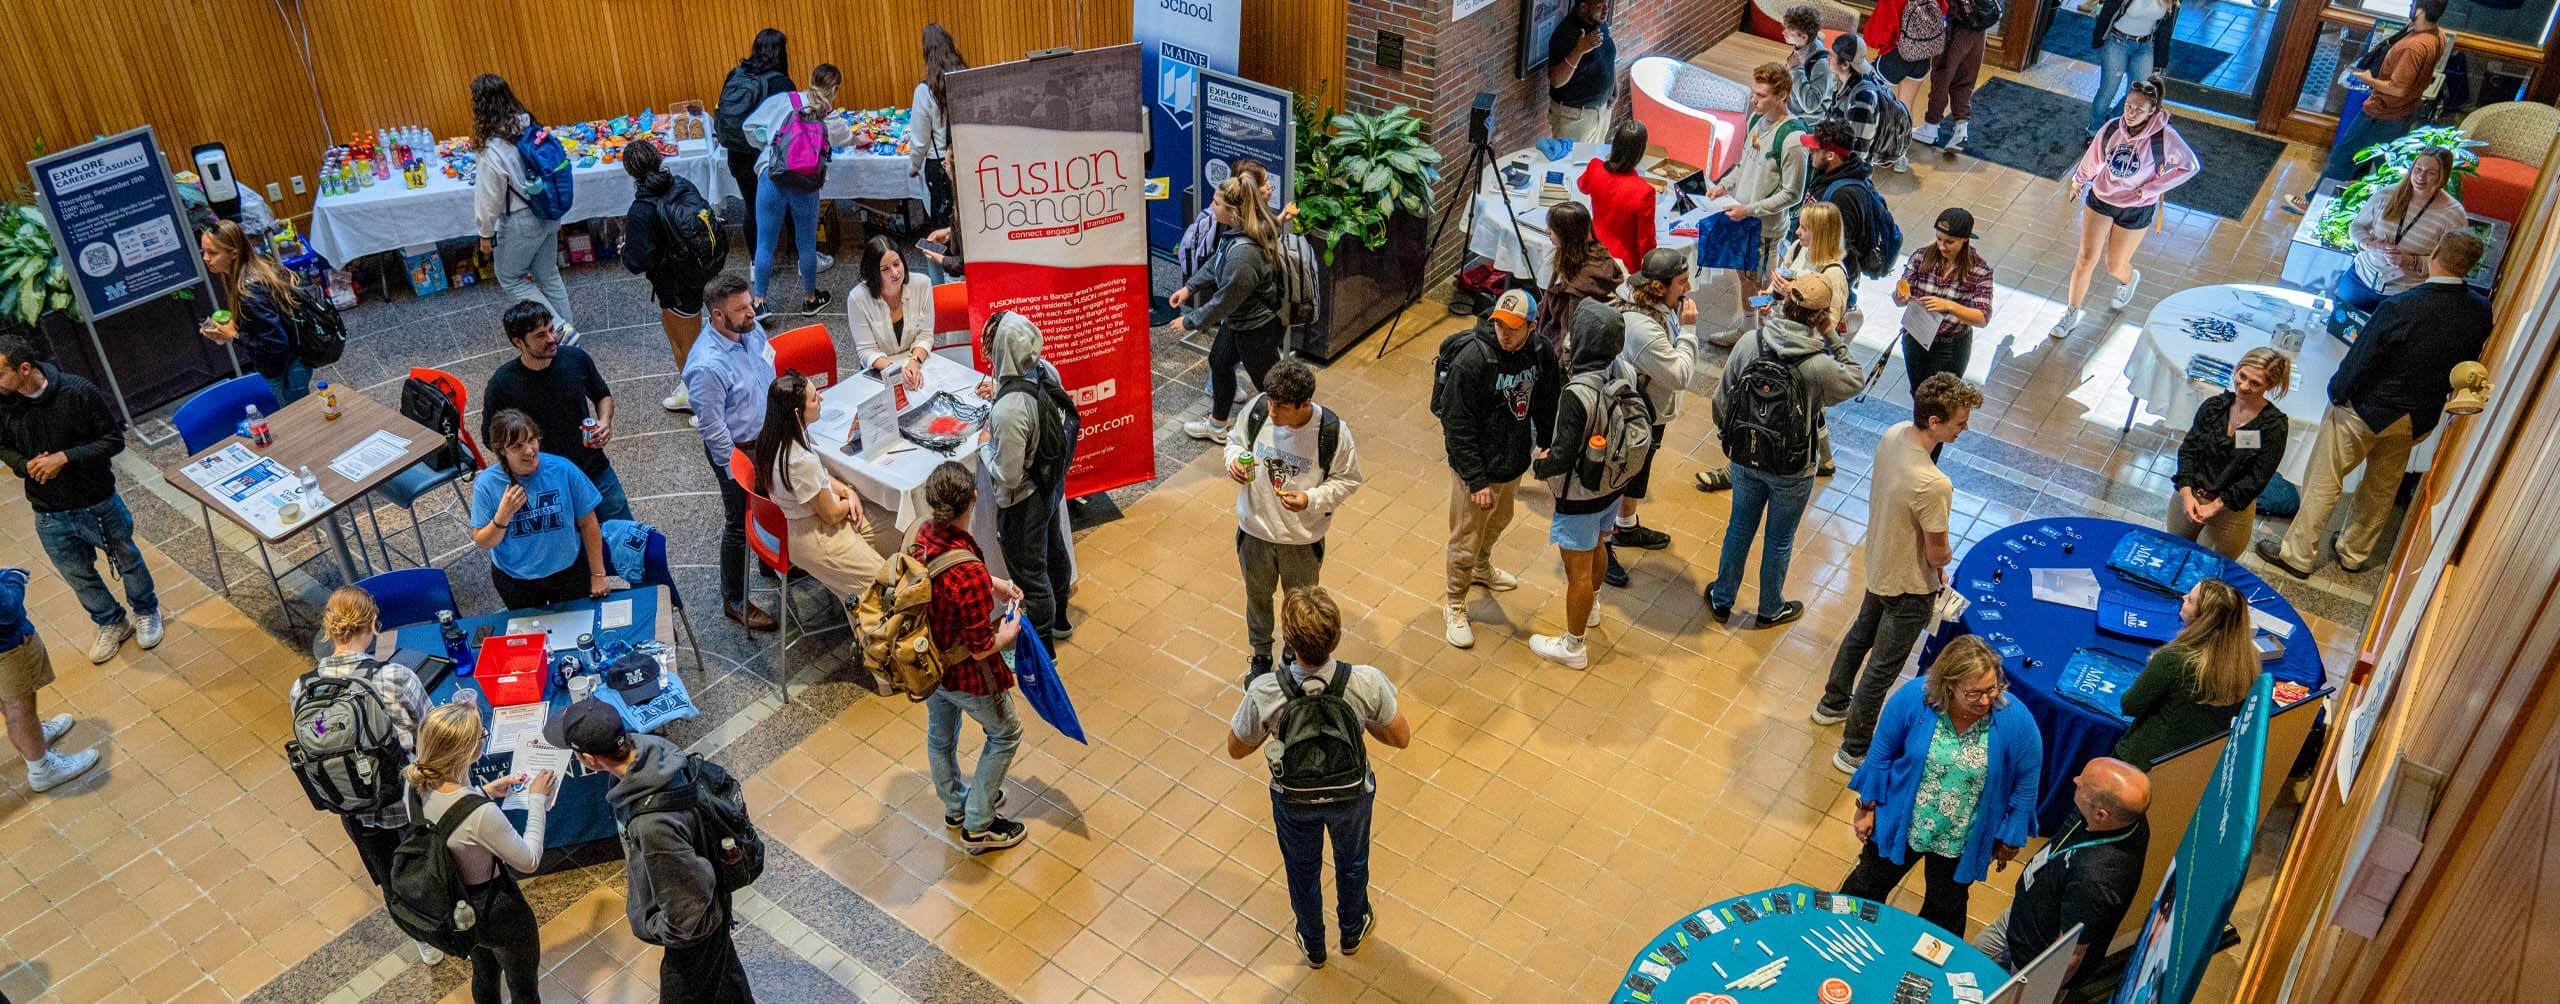 A photo of a Maine Business School marketing fair